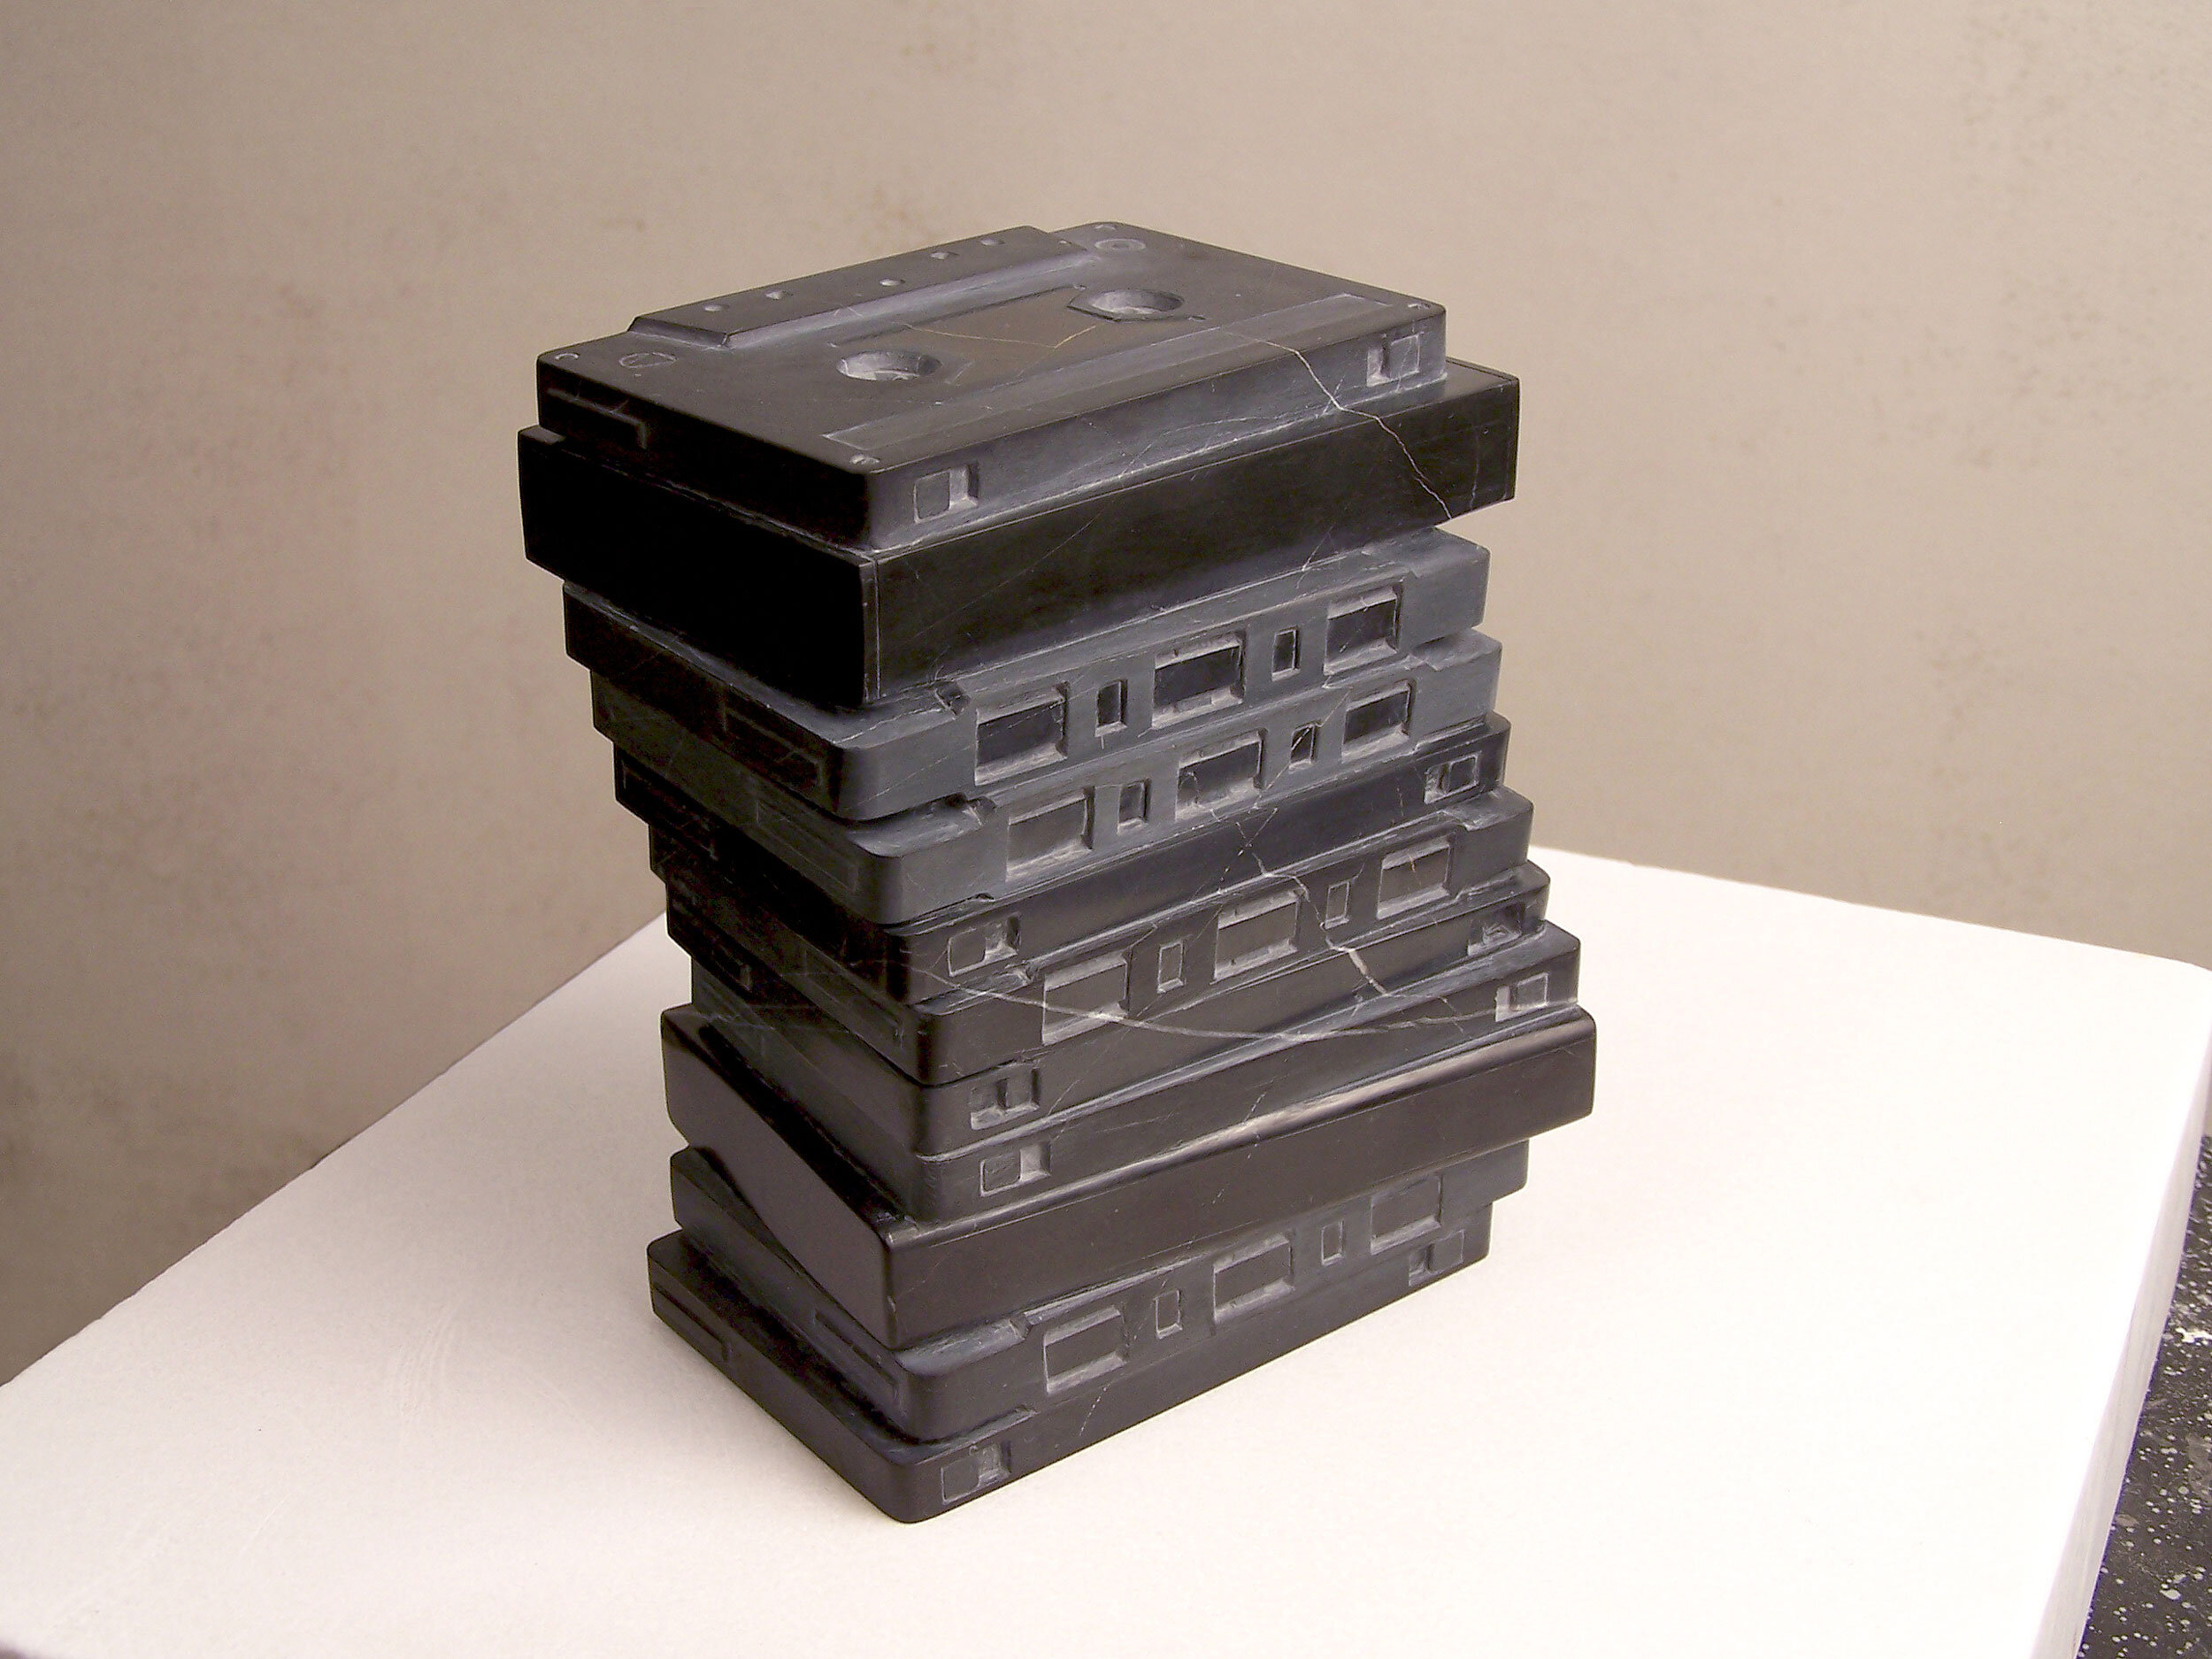 Hand-carved black marble cassette tapes by Peter Glenn Oakley.